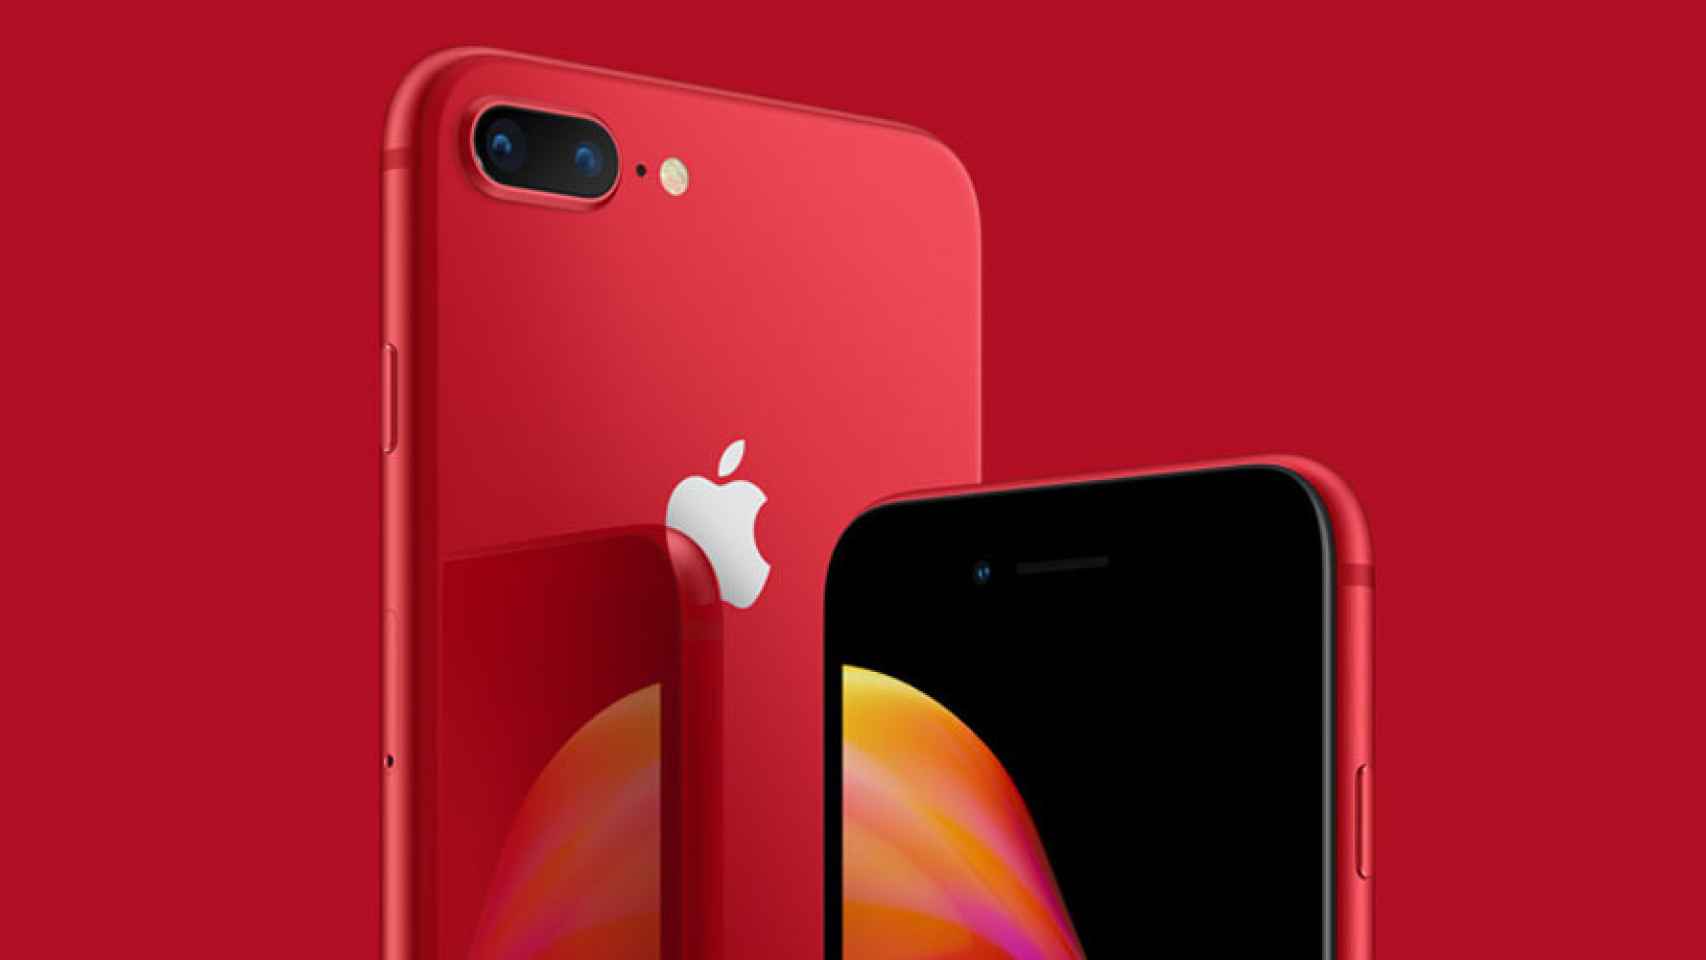 iphone 8 y 8 plus (product)red special edition destacada